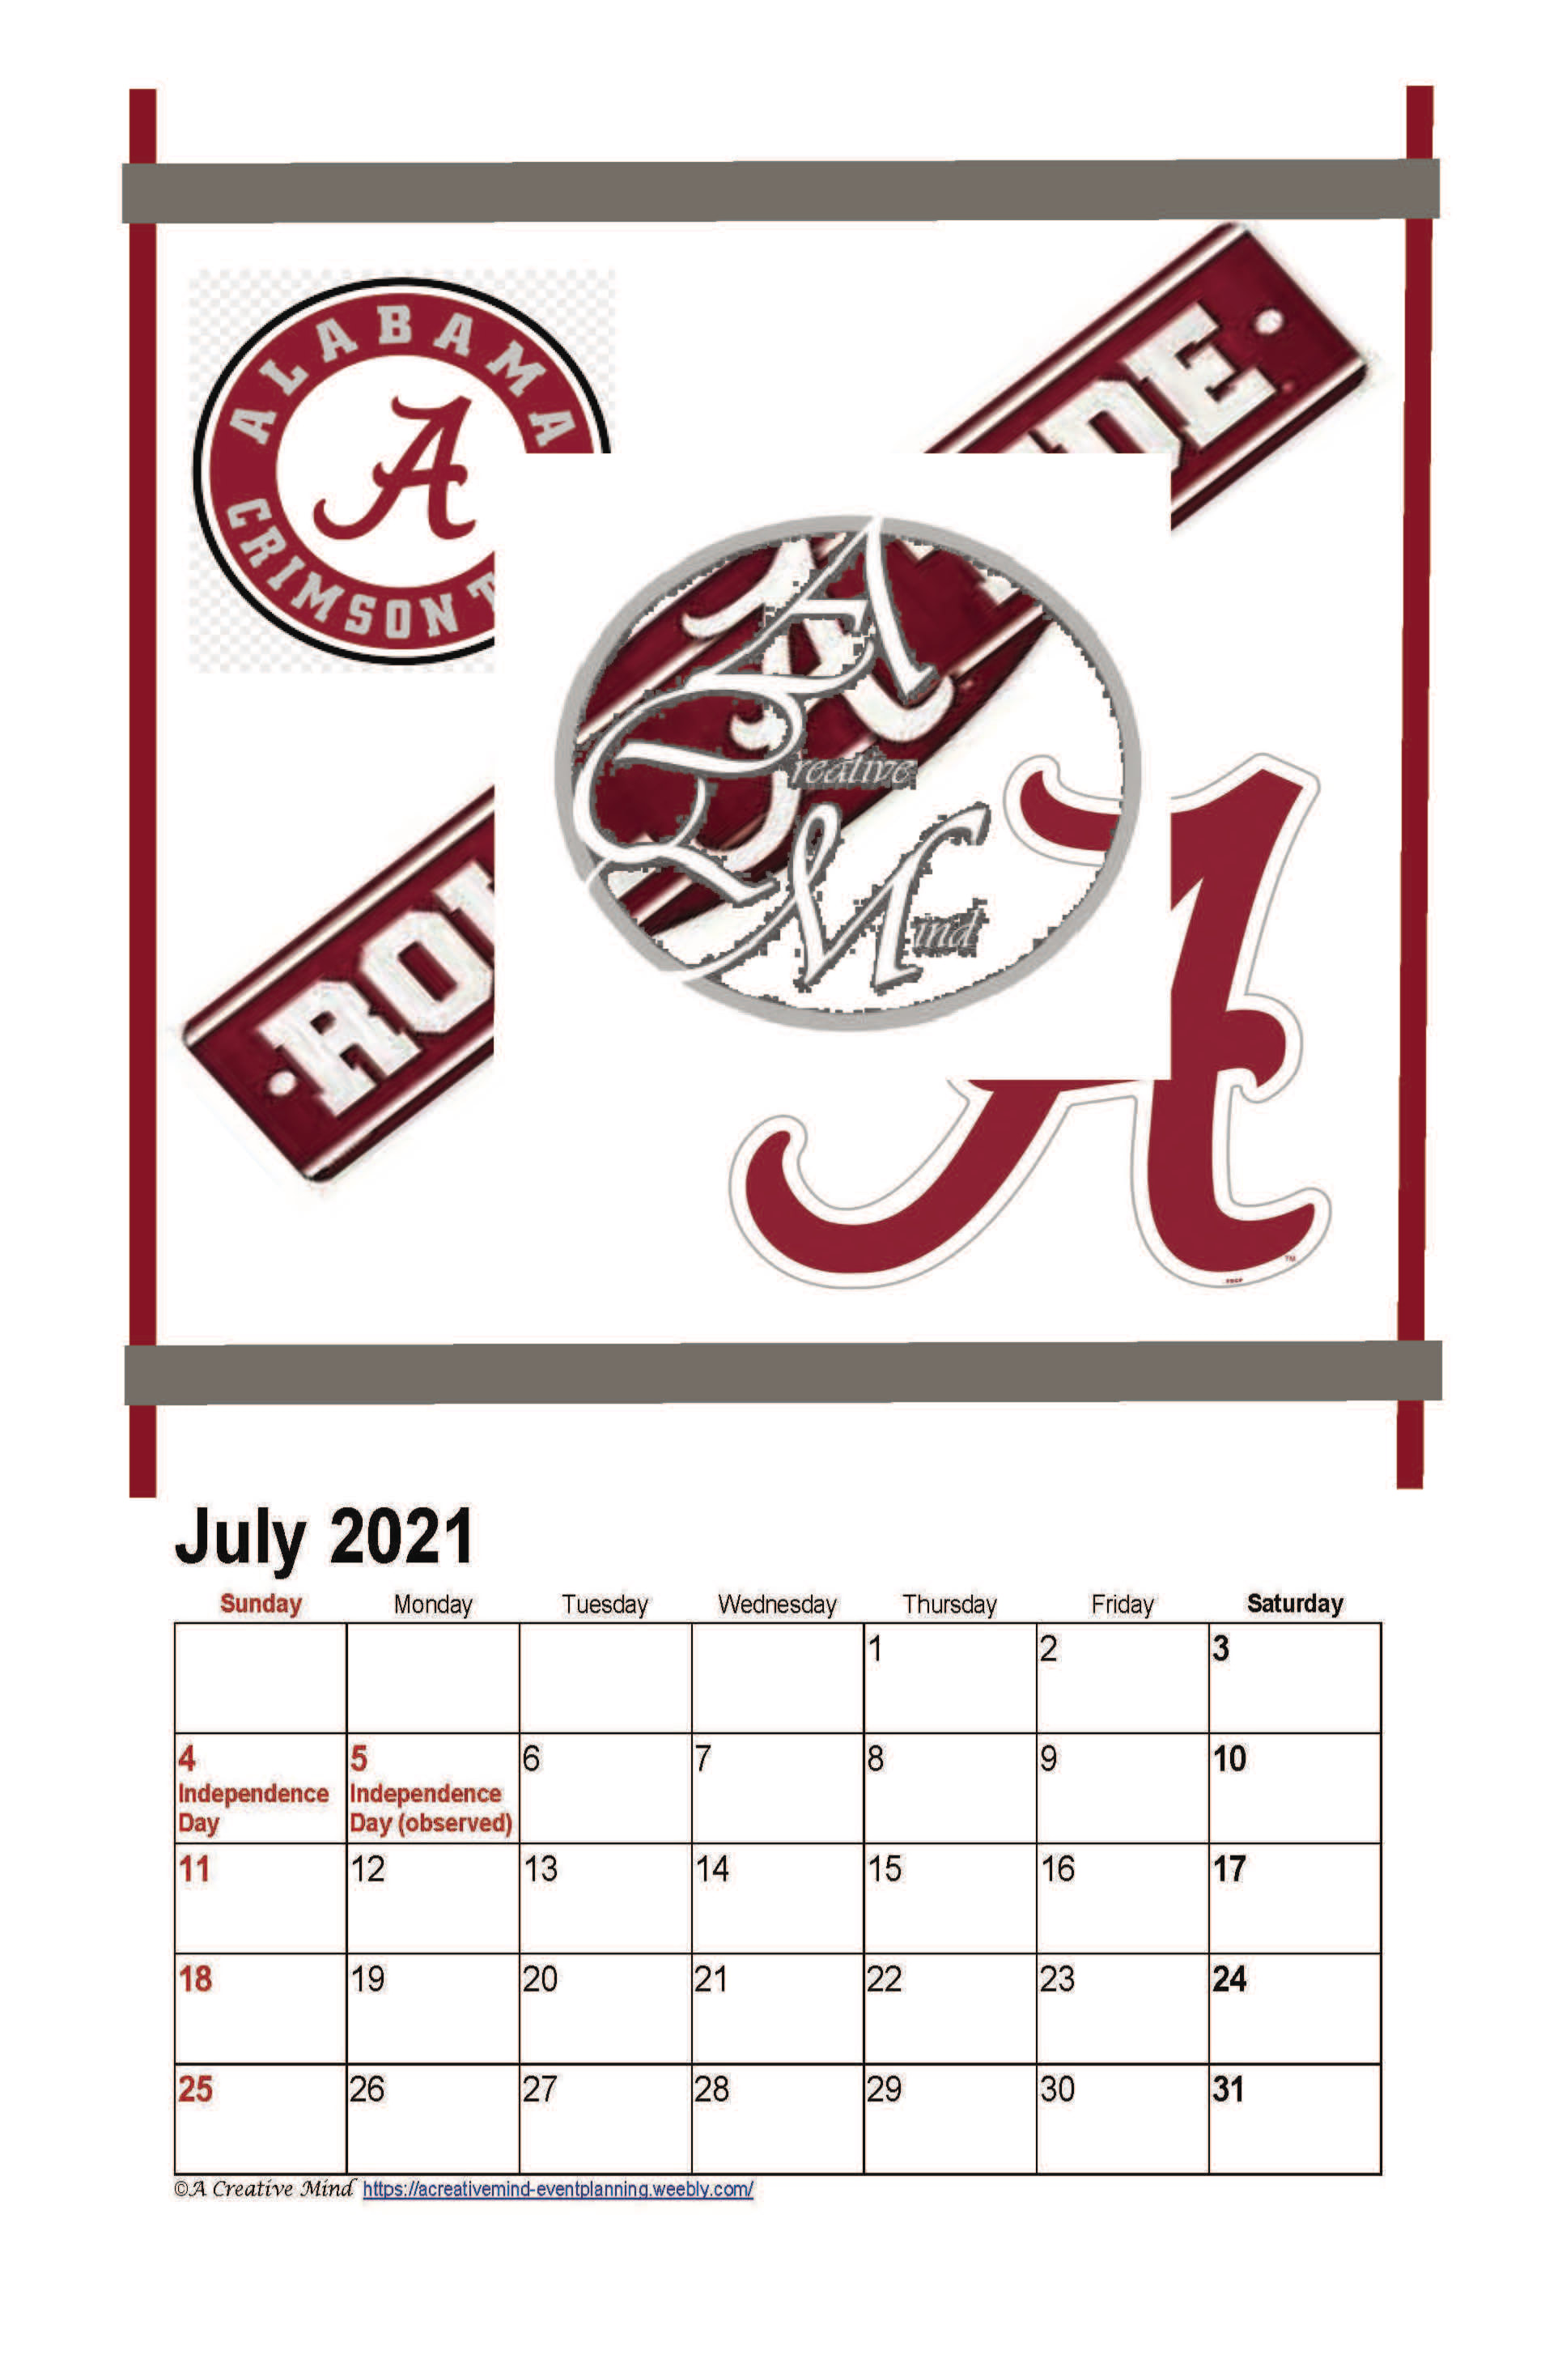 University of Alabama 2021 Wall Calendar